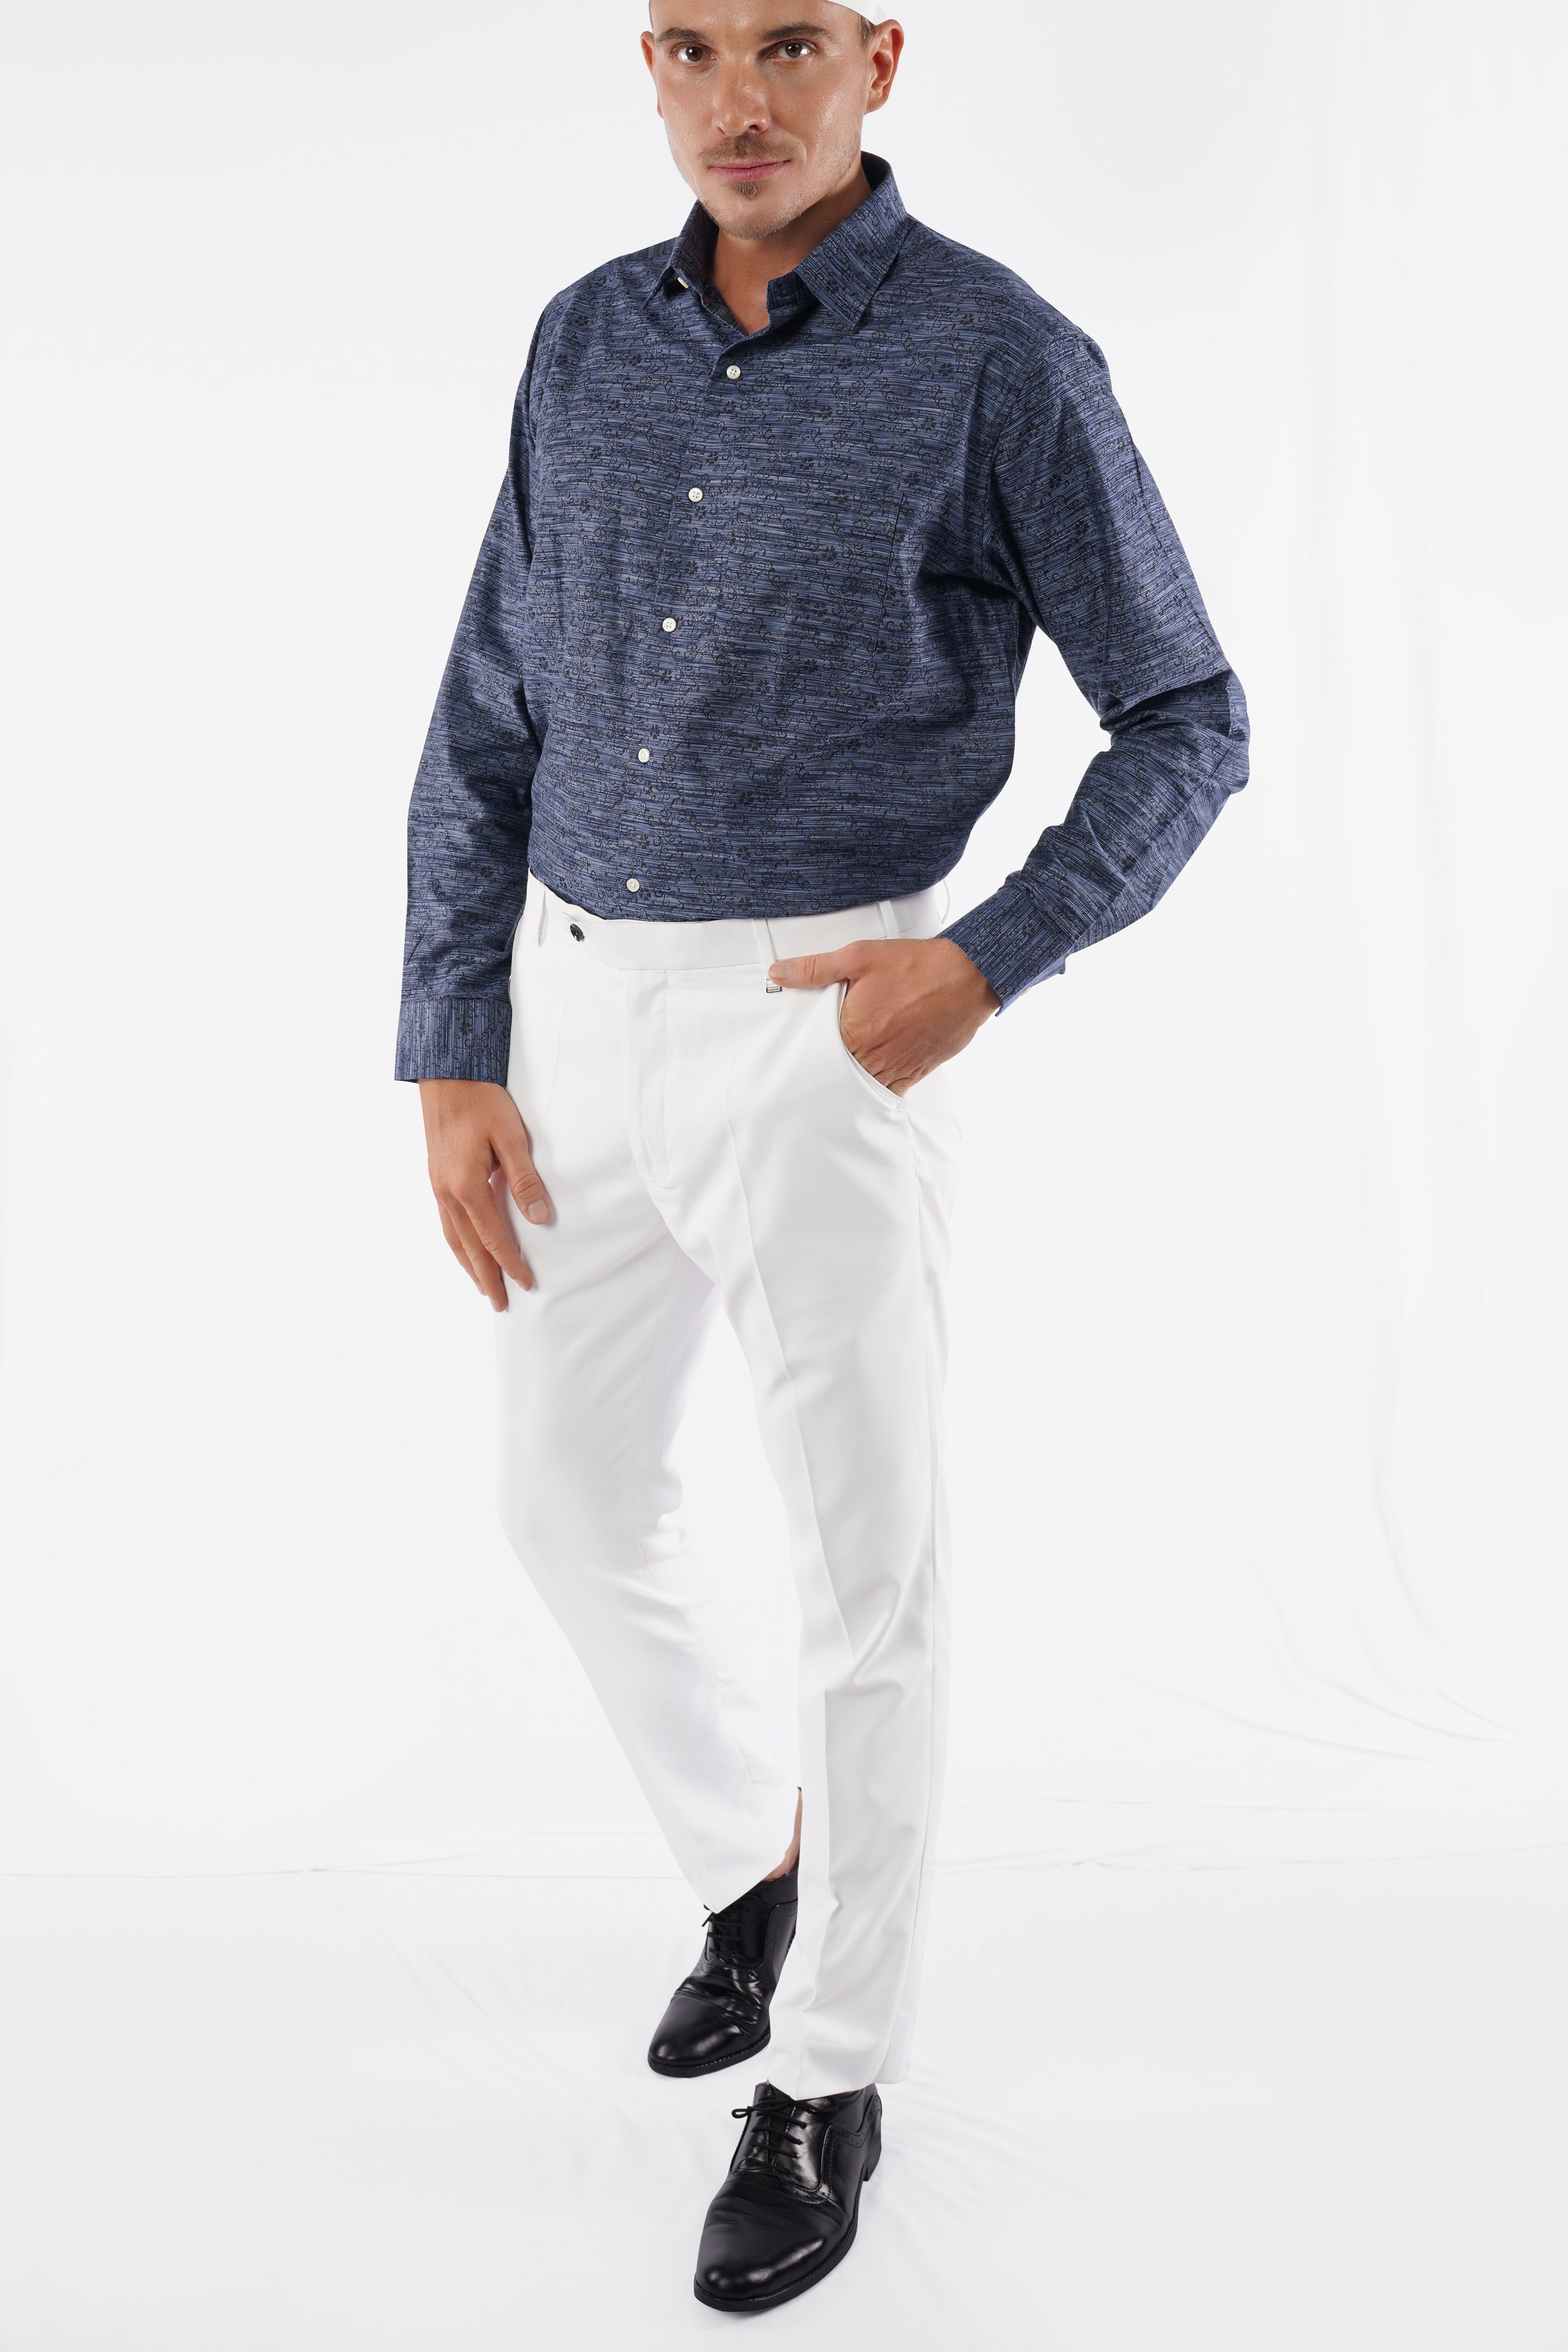 Twilight Blue and Black Jacquard Textured Premium Giza Cotton Shirt